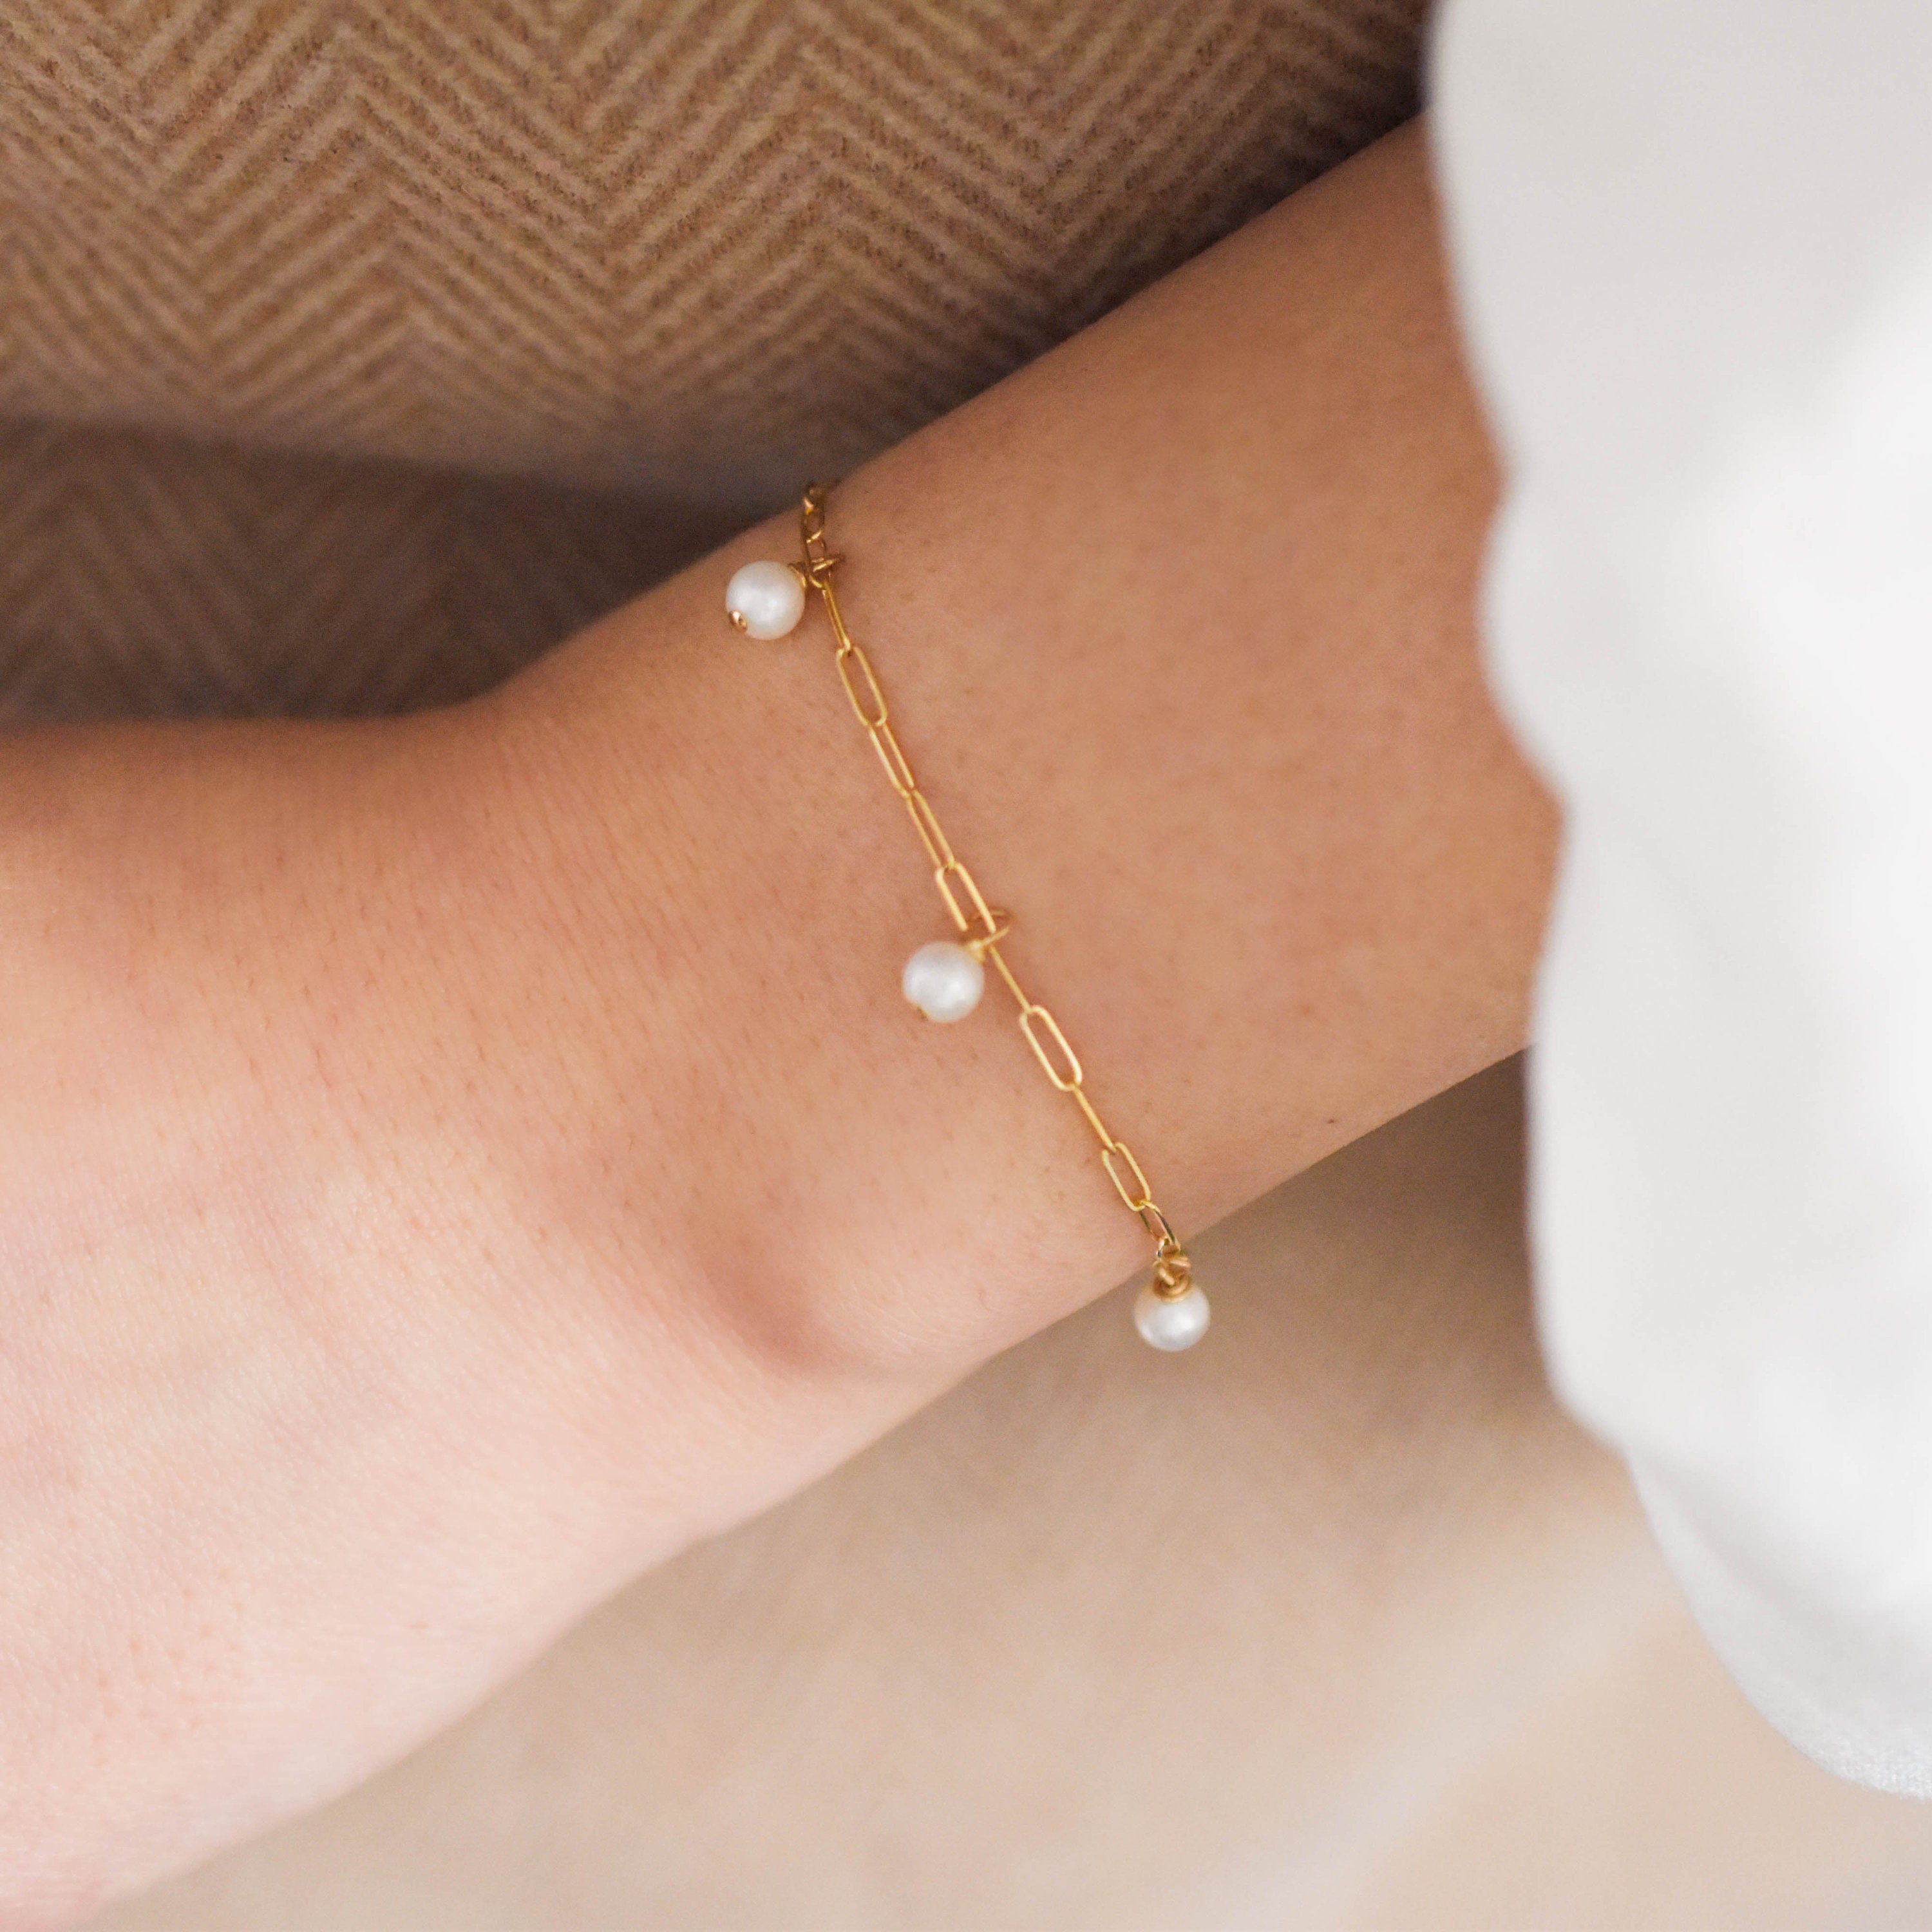 Natural Freshwater pearl Bracelet Charm Bangle Multilayer Jewelry Women  Fashion | eBay